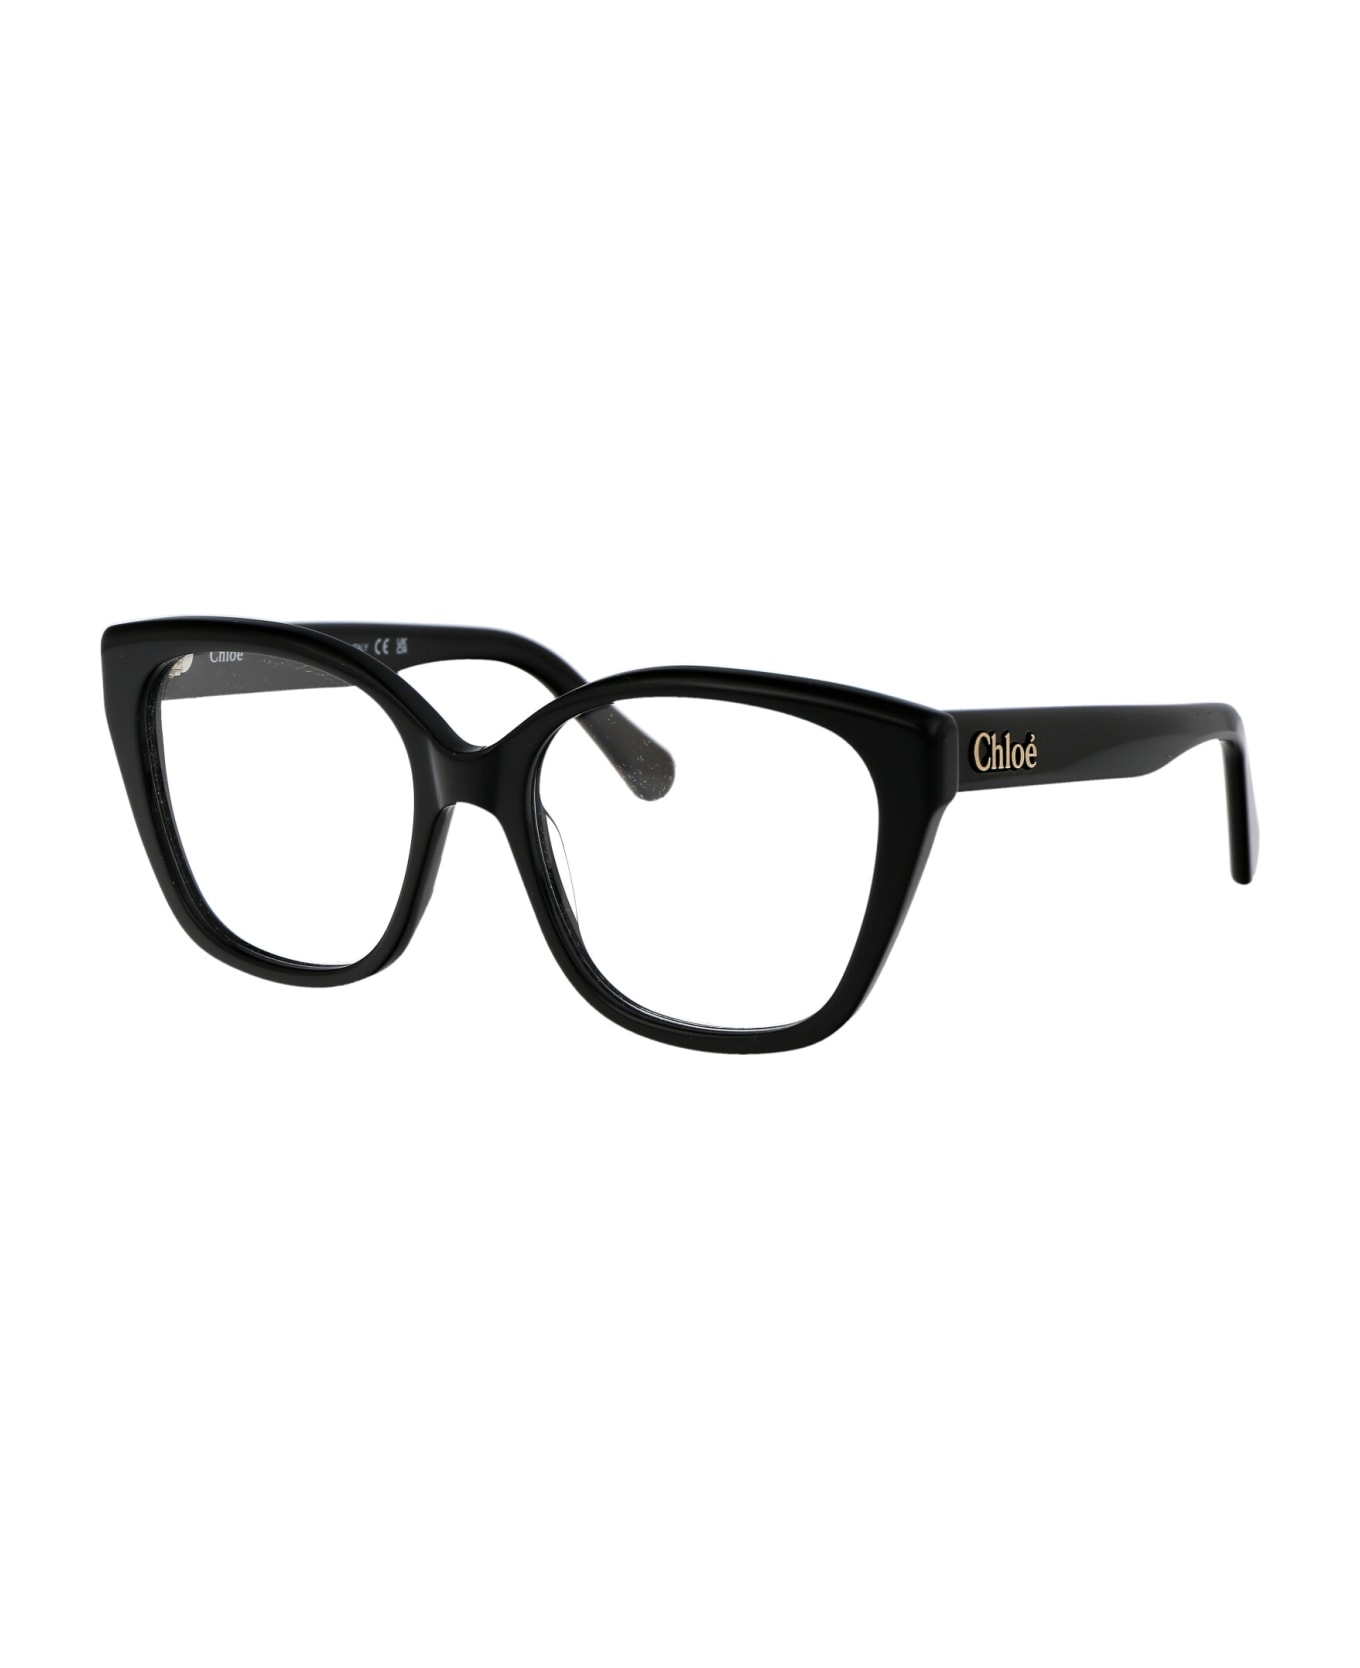 Chloé Eyewear Ch0241o Glasses - 001 BLACK BLACK TRANSPARENT